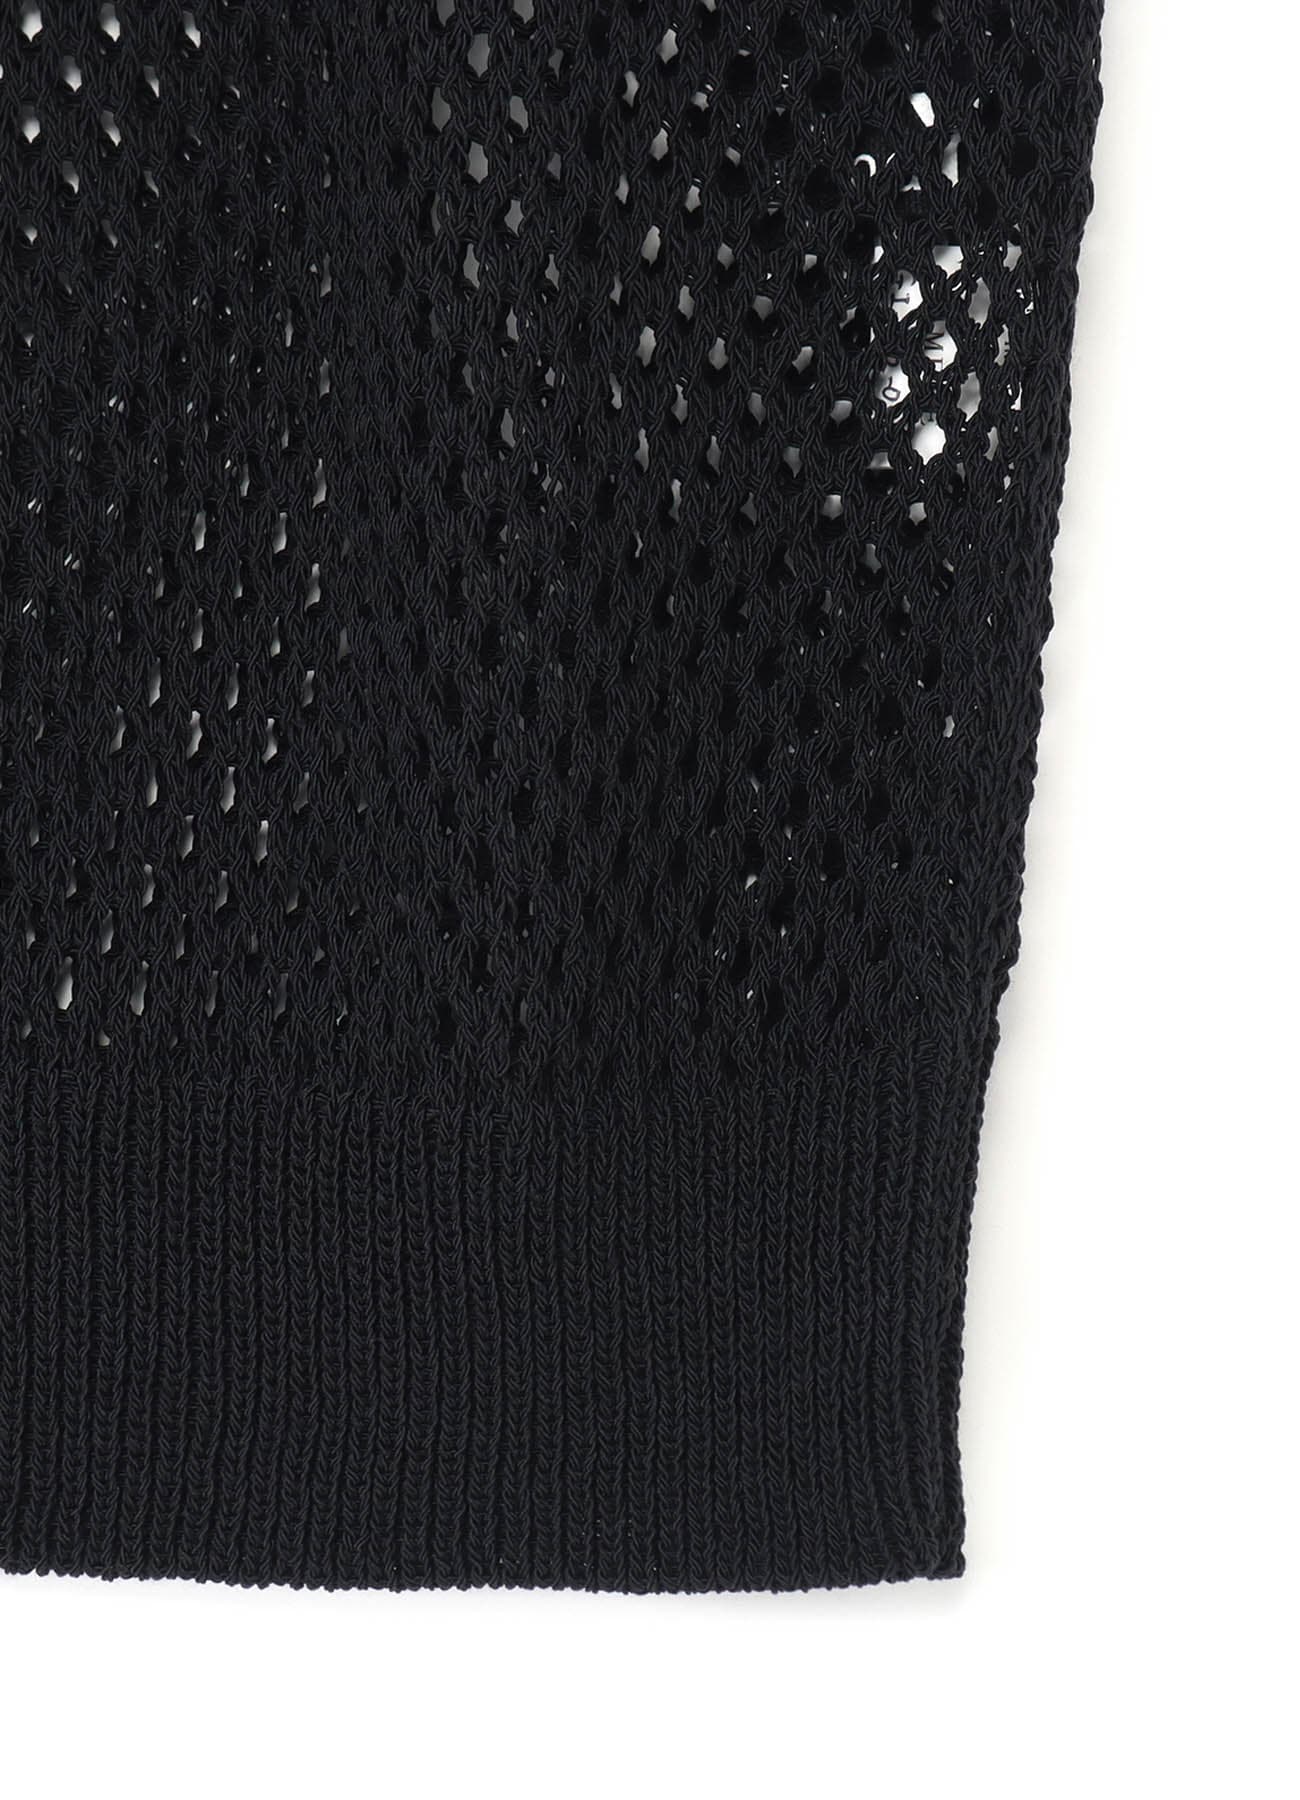 Cotton/Nylon Mesh Knitted Vest